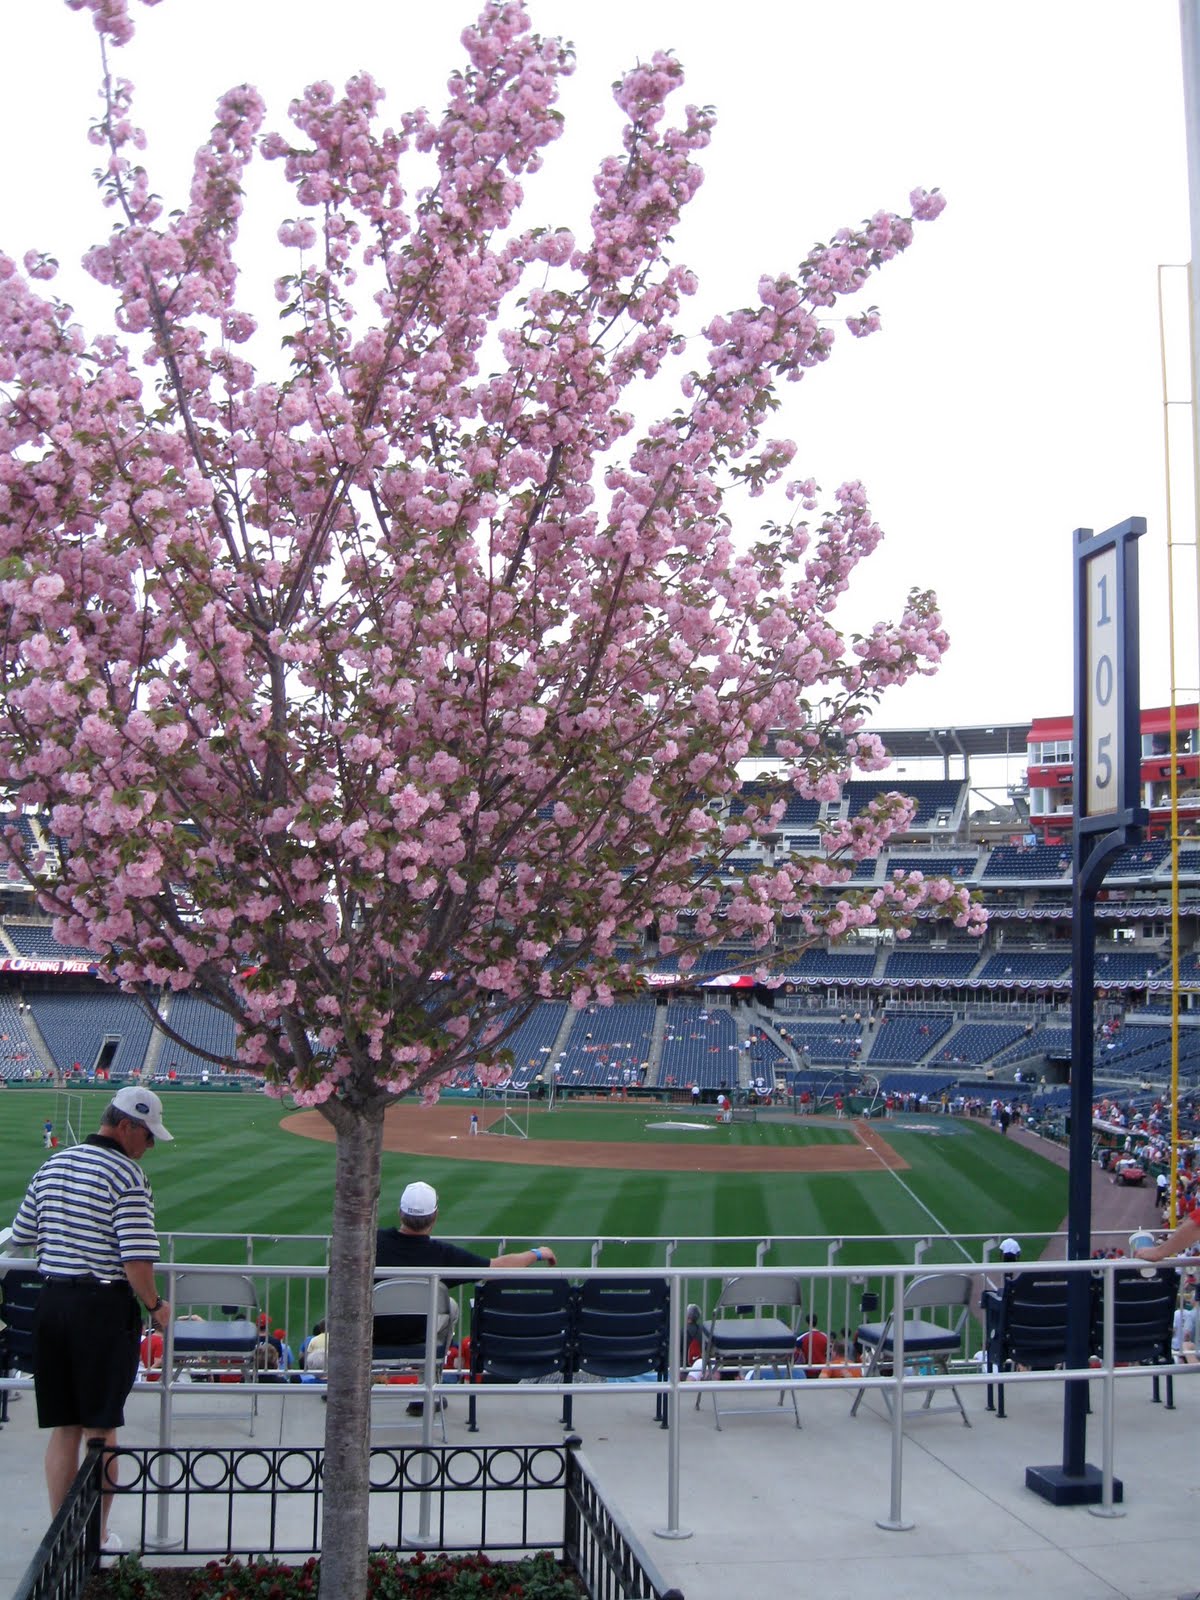 Nats320 -- A Washington Nationals Blog: More Cherry Blossom